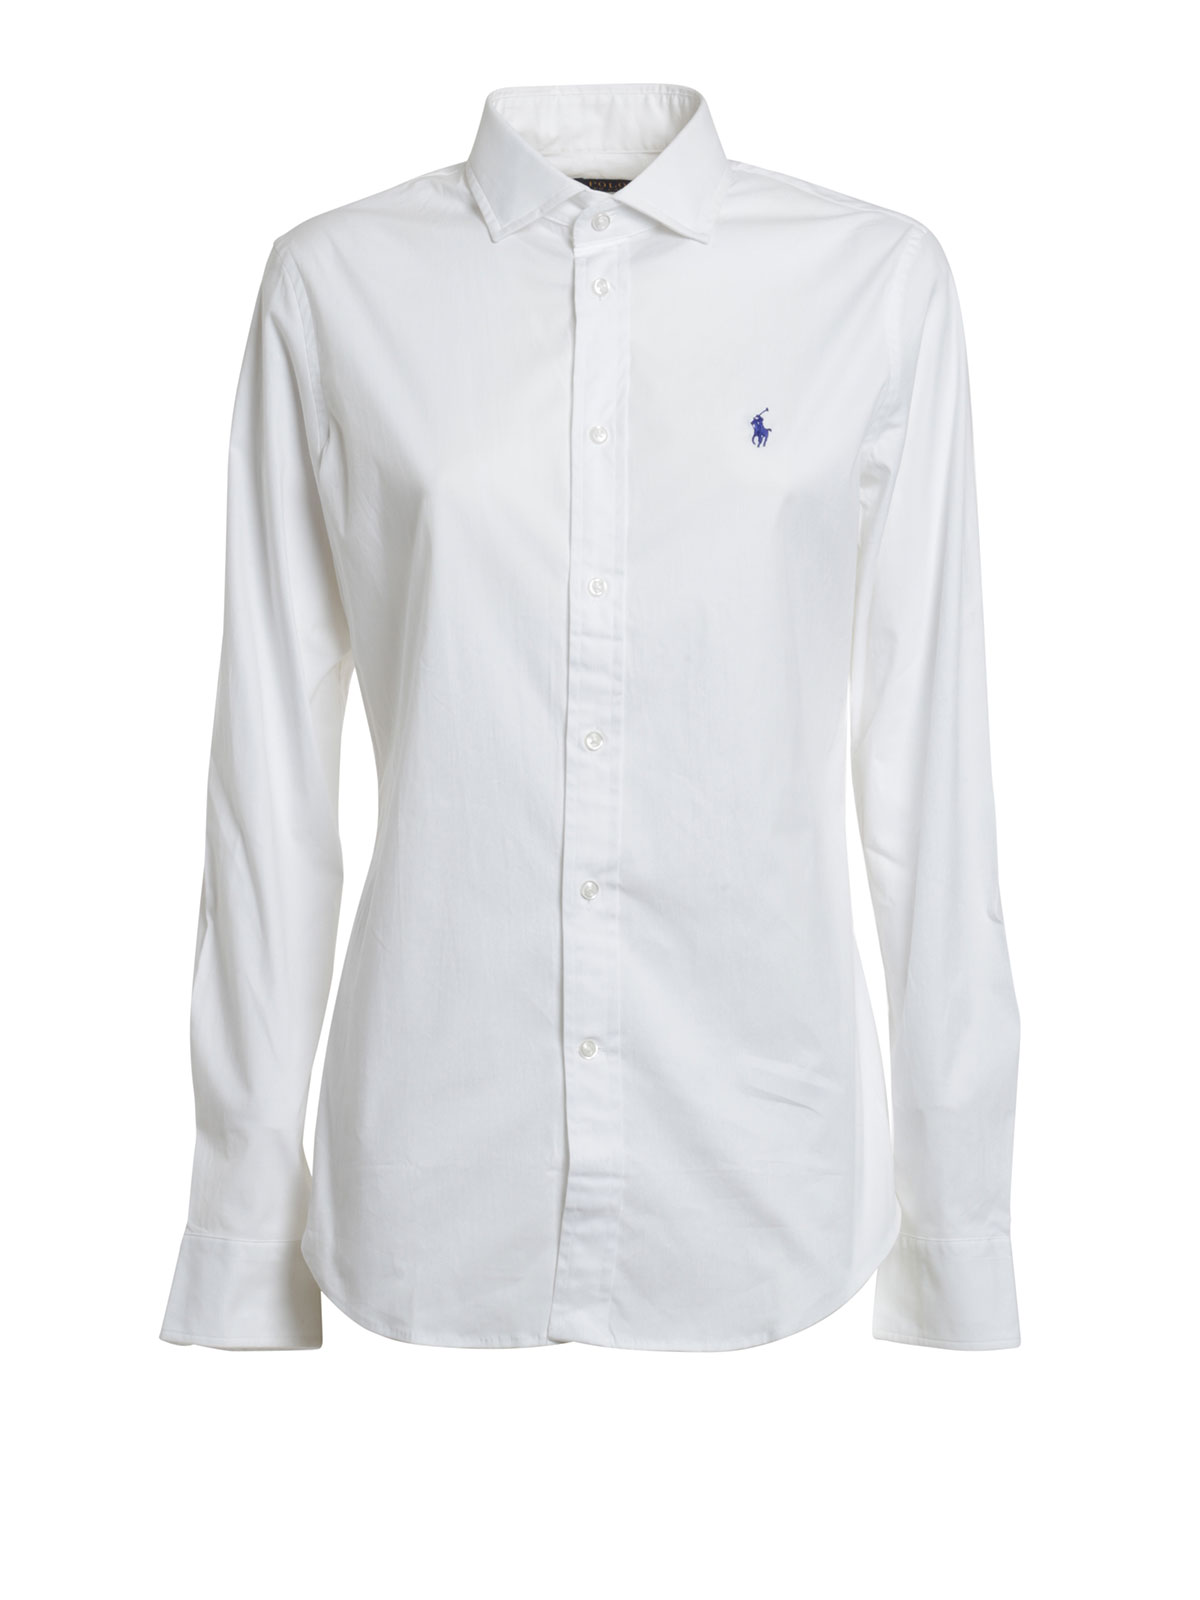 Camisas Ralph Lauren Camisa Blanca Mujer - V33IG270BG207B1426